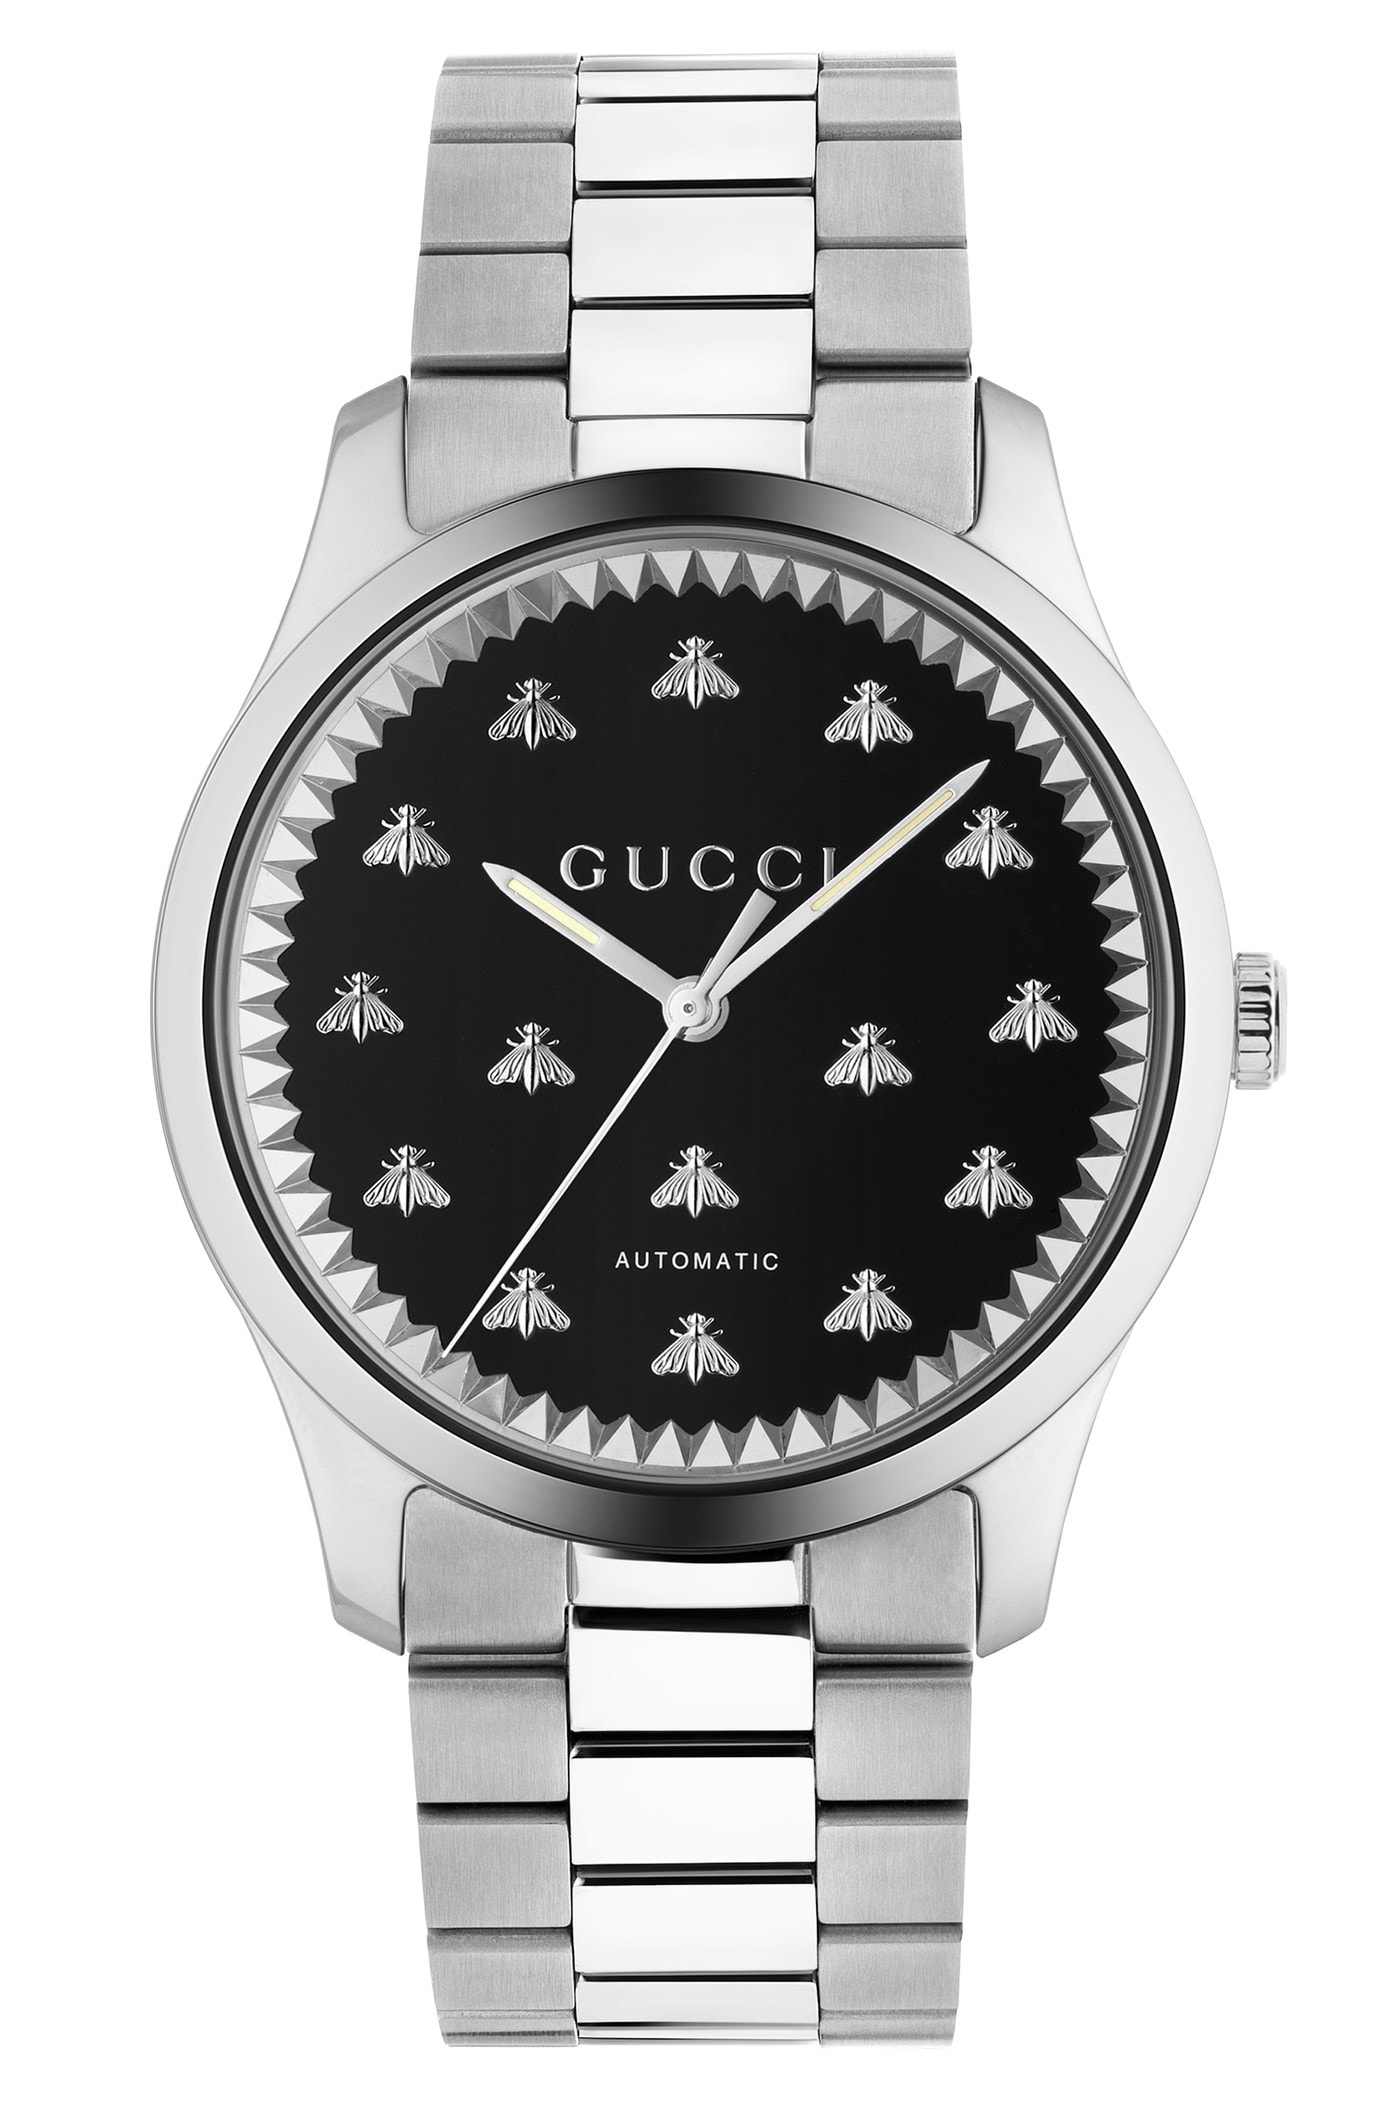 Baselworld 2019 − Gucci 全新腕錶系列發佈